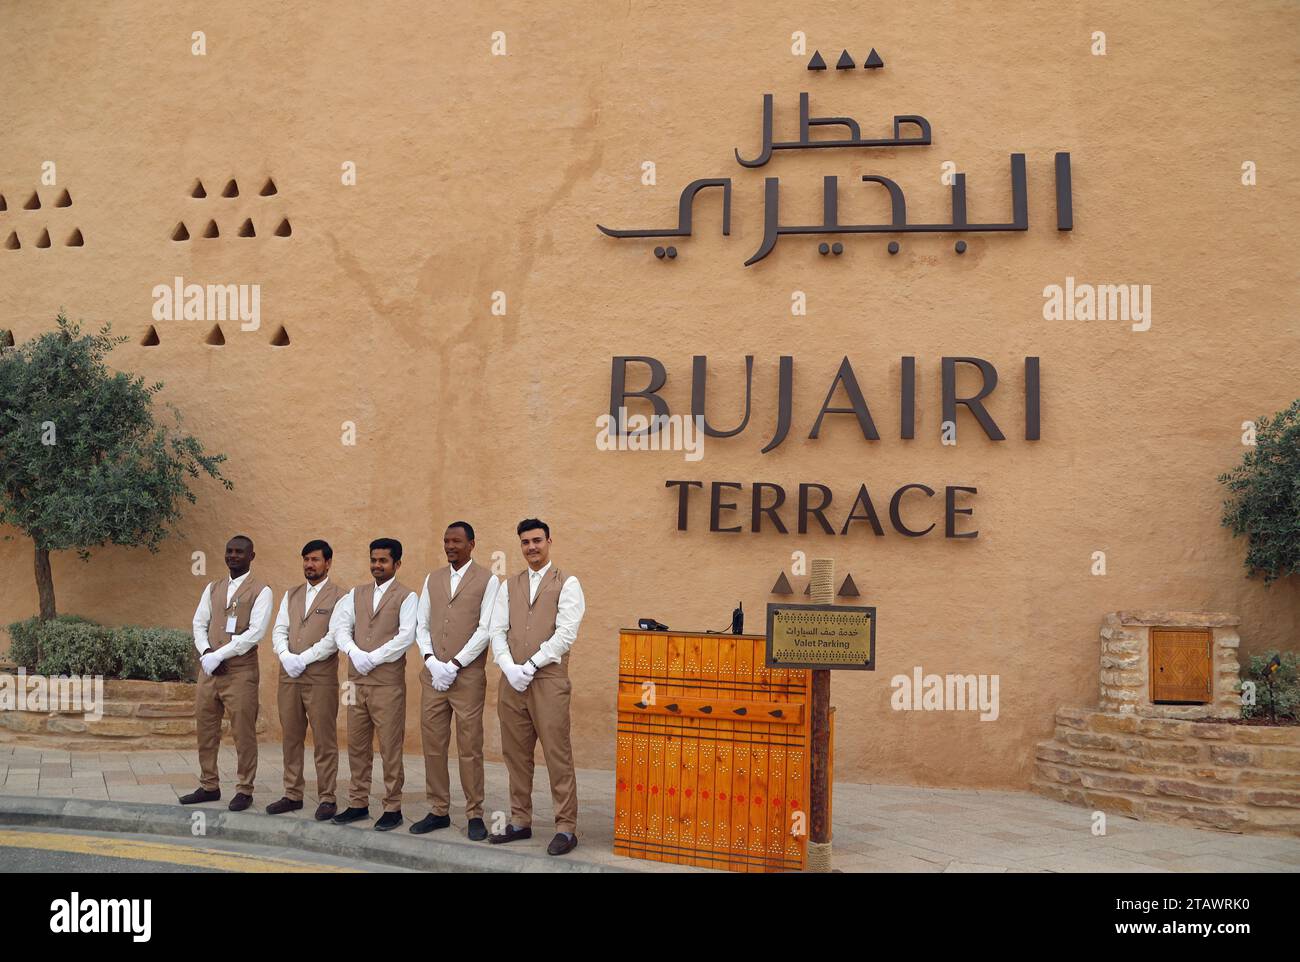 Parking staff at Bujairi Terrace in Riyadh Stock Photo